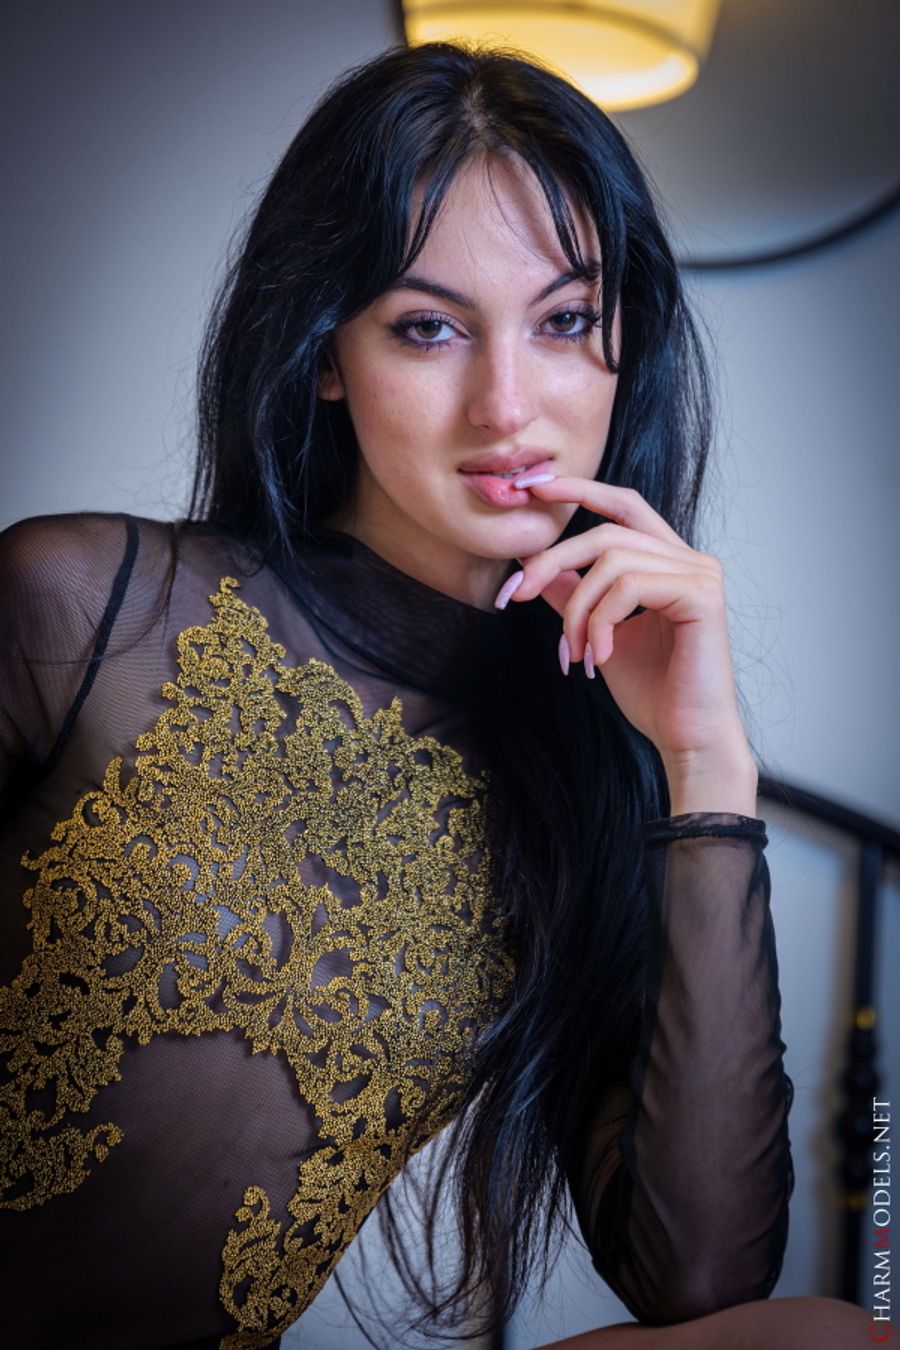 Corinna Armenian girl with transparent bodysuit Photo Gallery Porn Pics, Sex Photos and XXX GIFs at TNAFLIX image